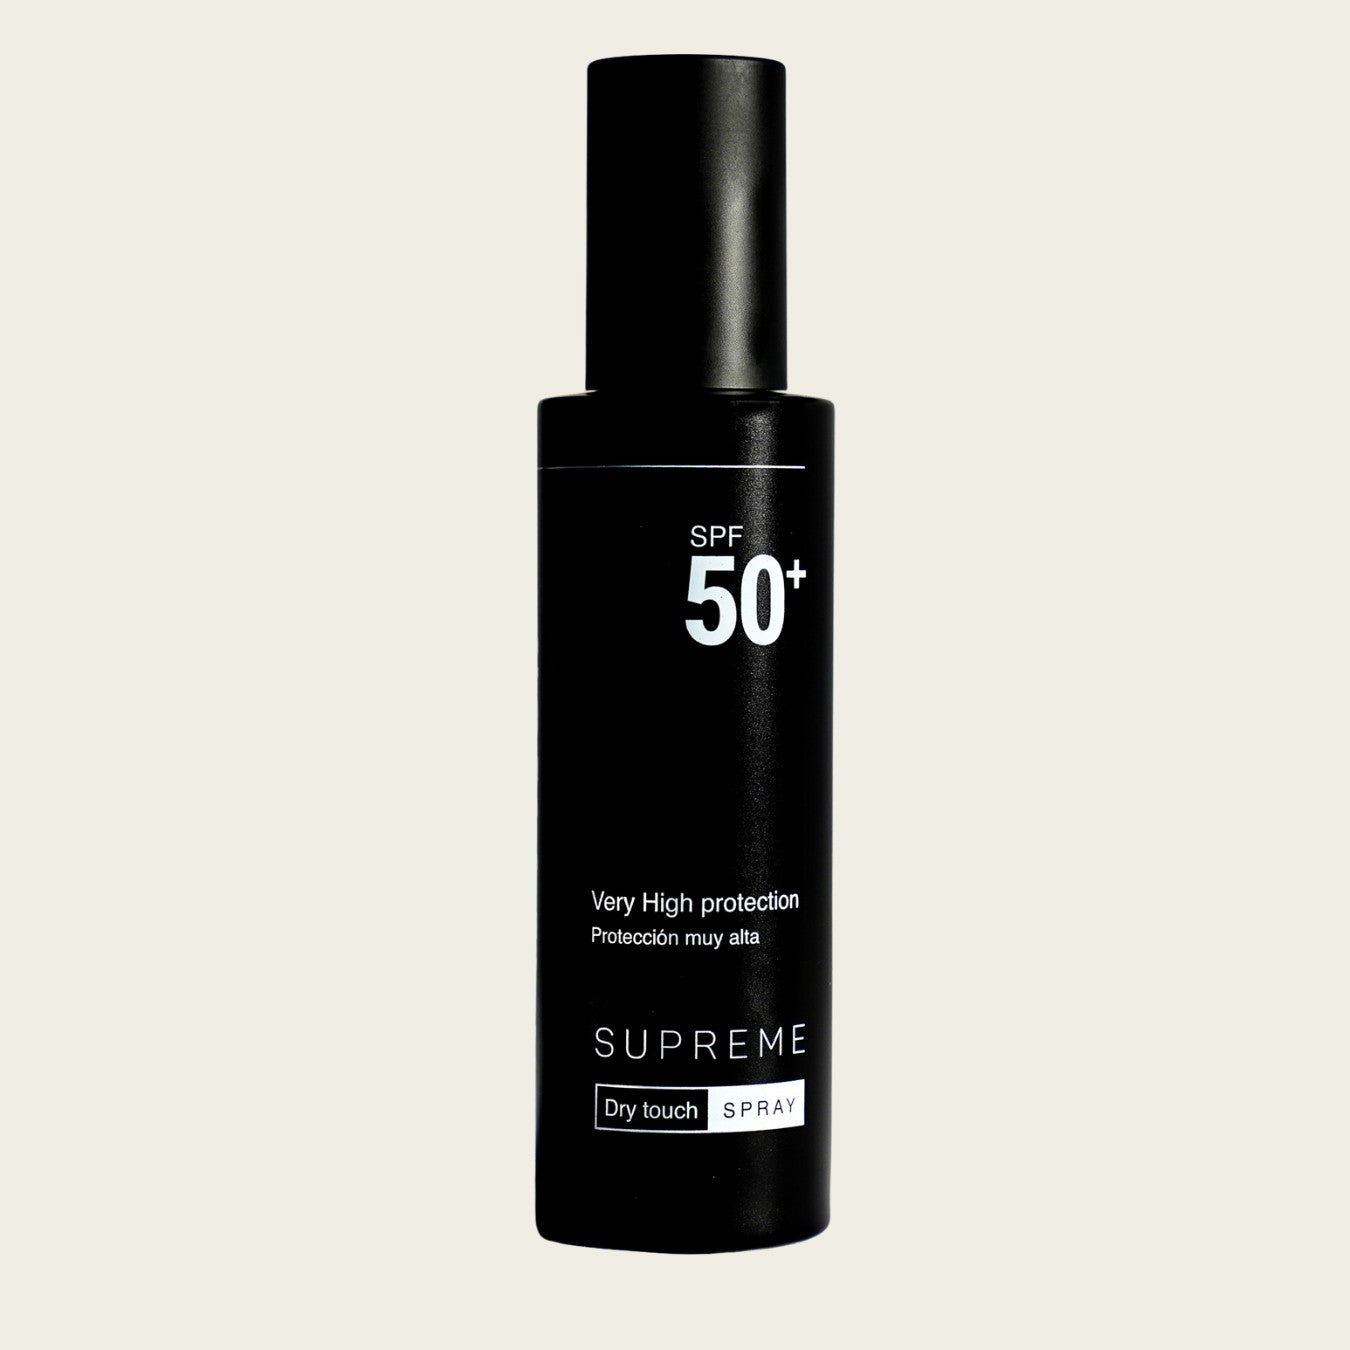 SUPREME Spray SPF50+